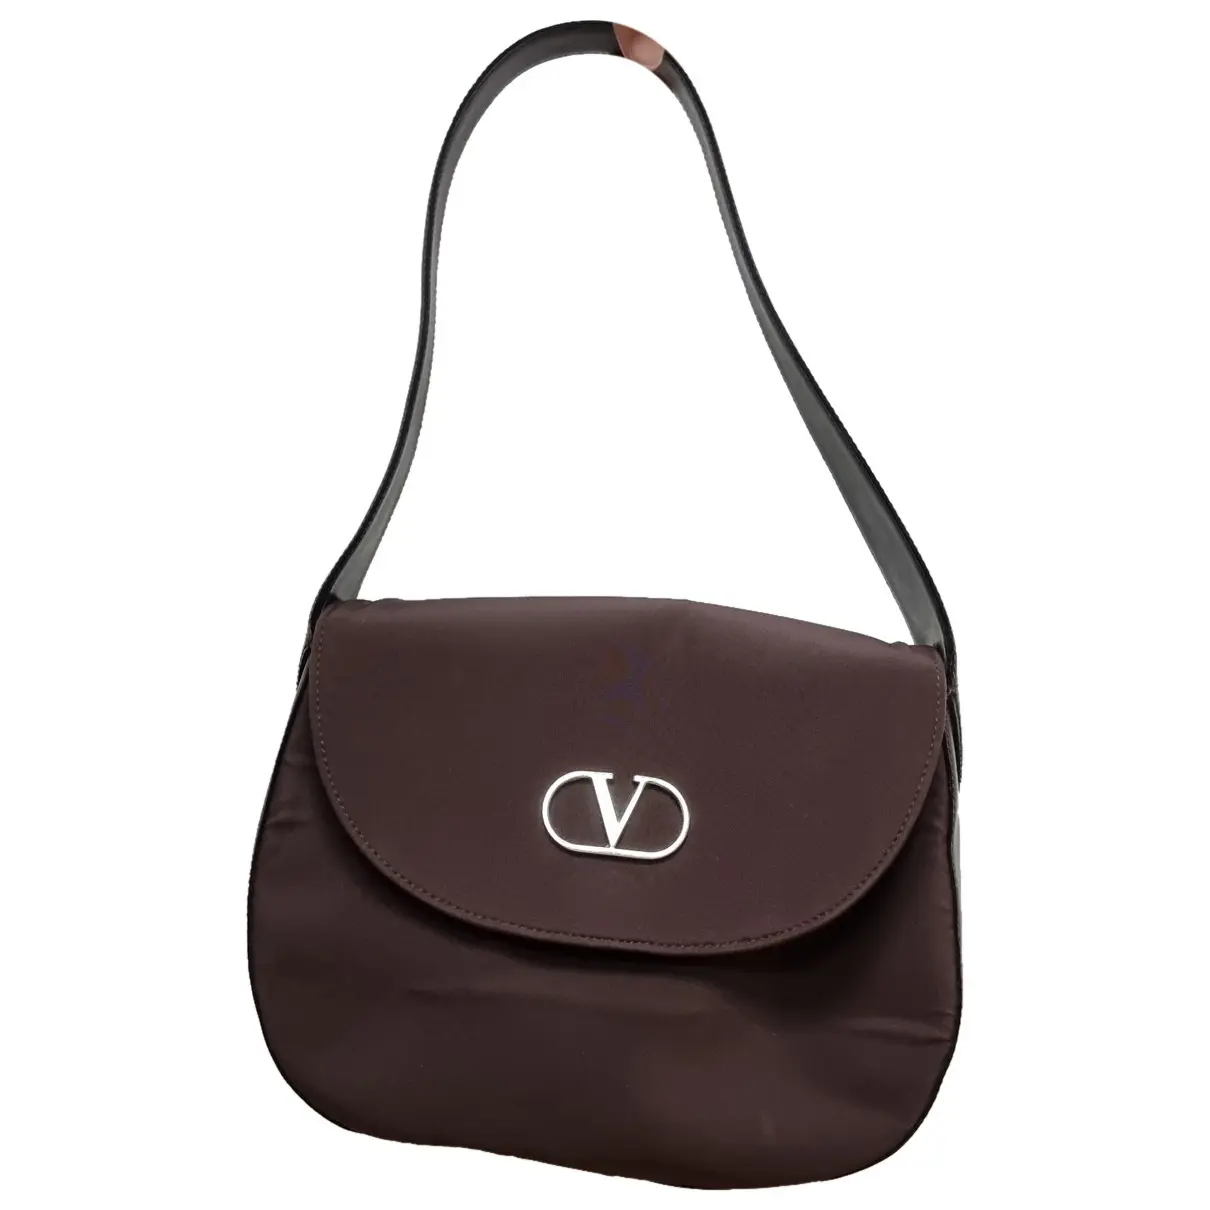 VLogo cloth handbag Valentino Garavani - Vintage